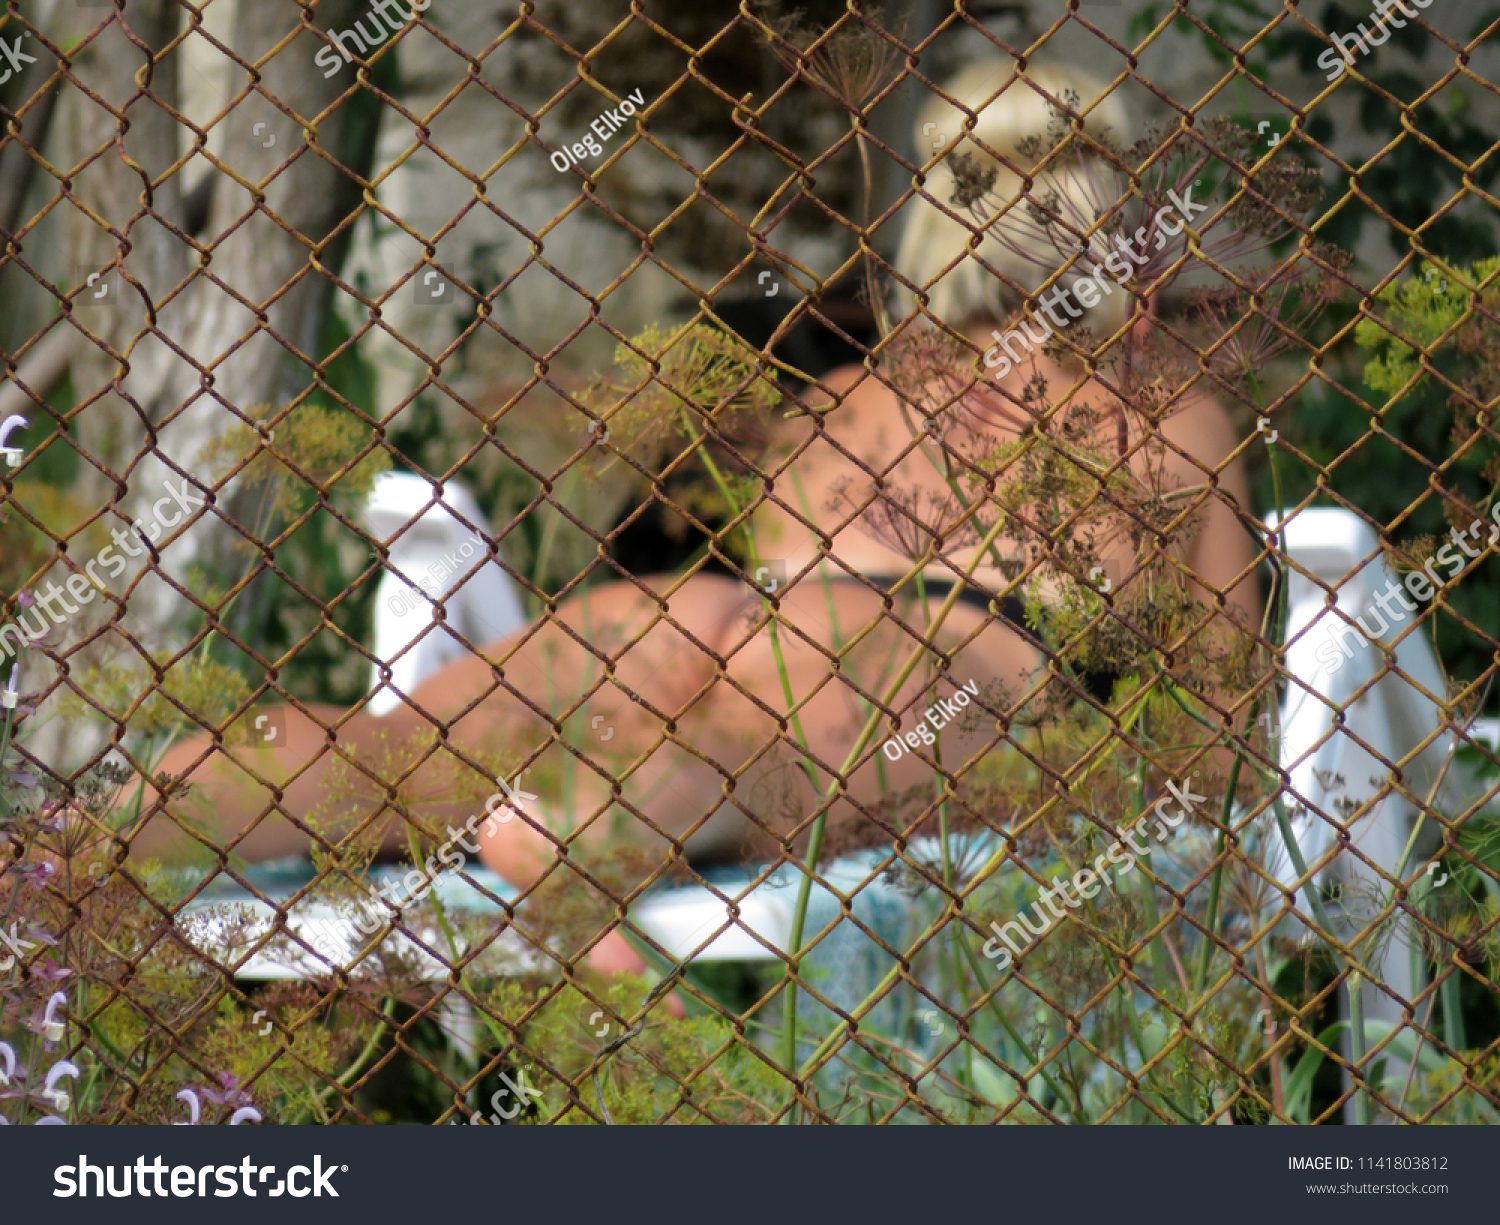 voyeur over the fence